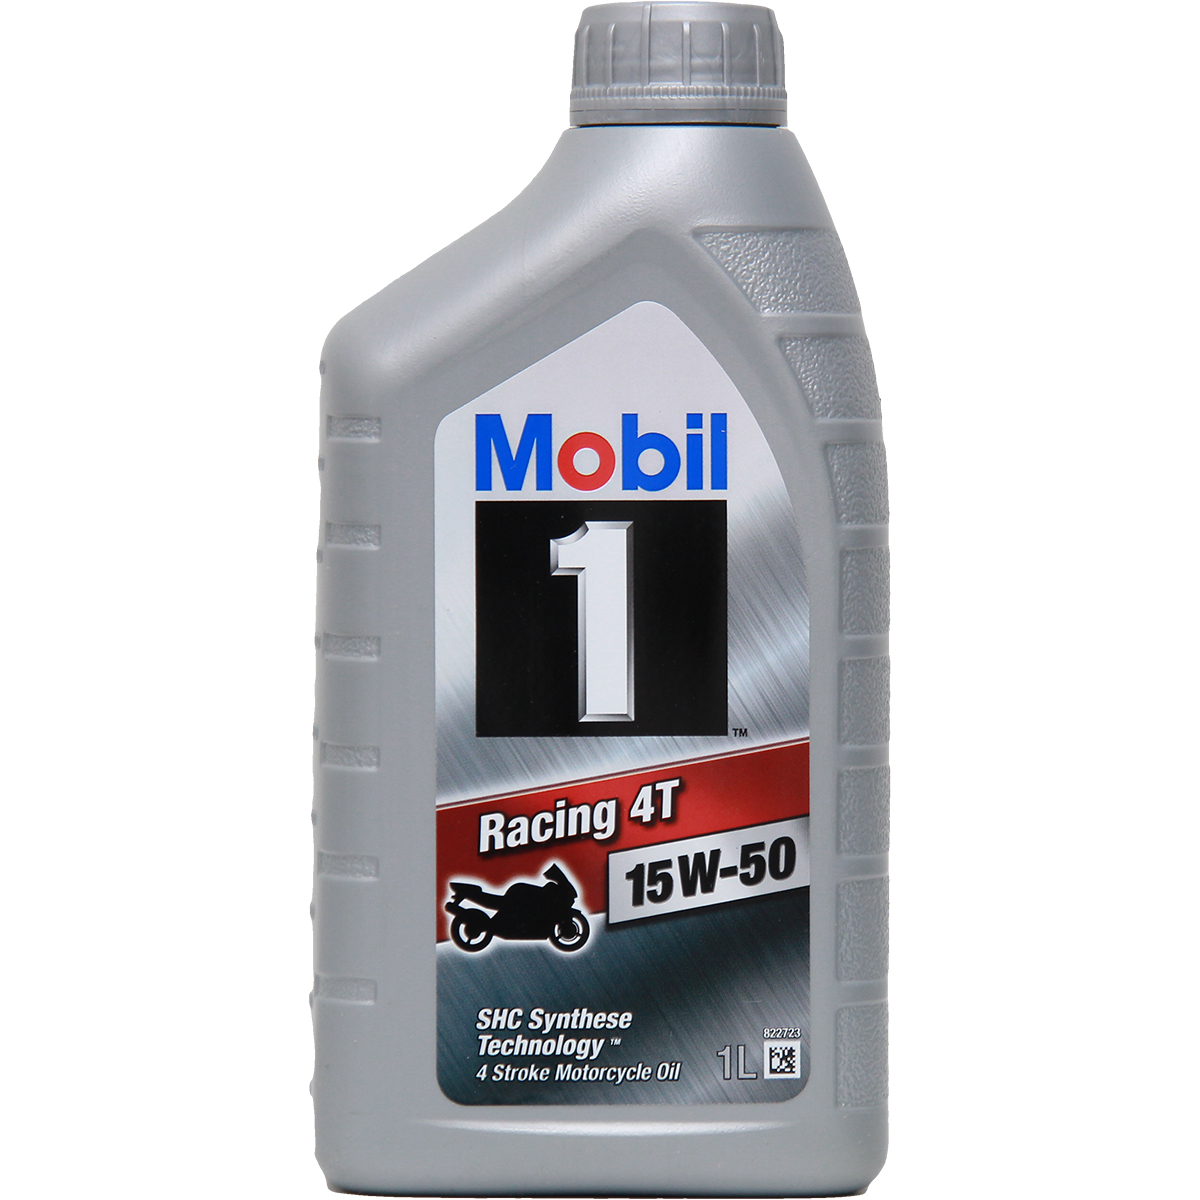 Mobil 1 Racing 4T 15W-50 1 Liter